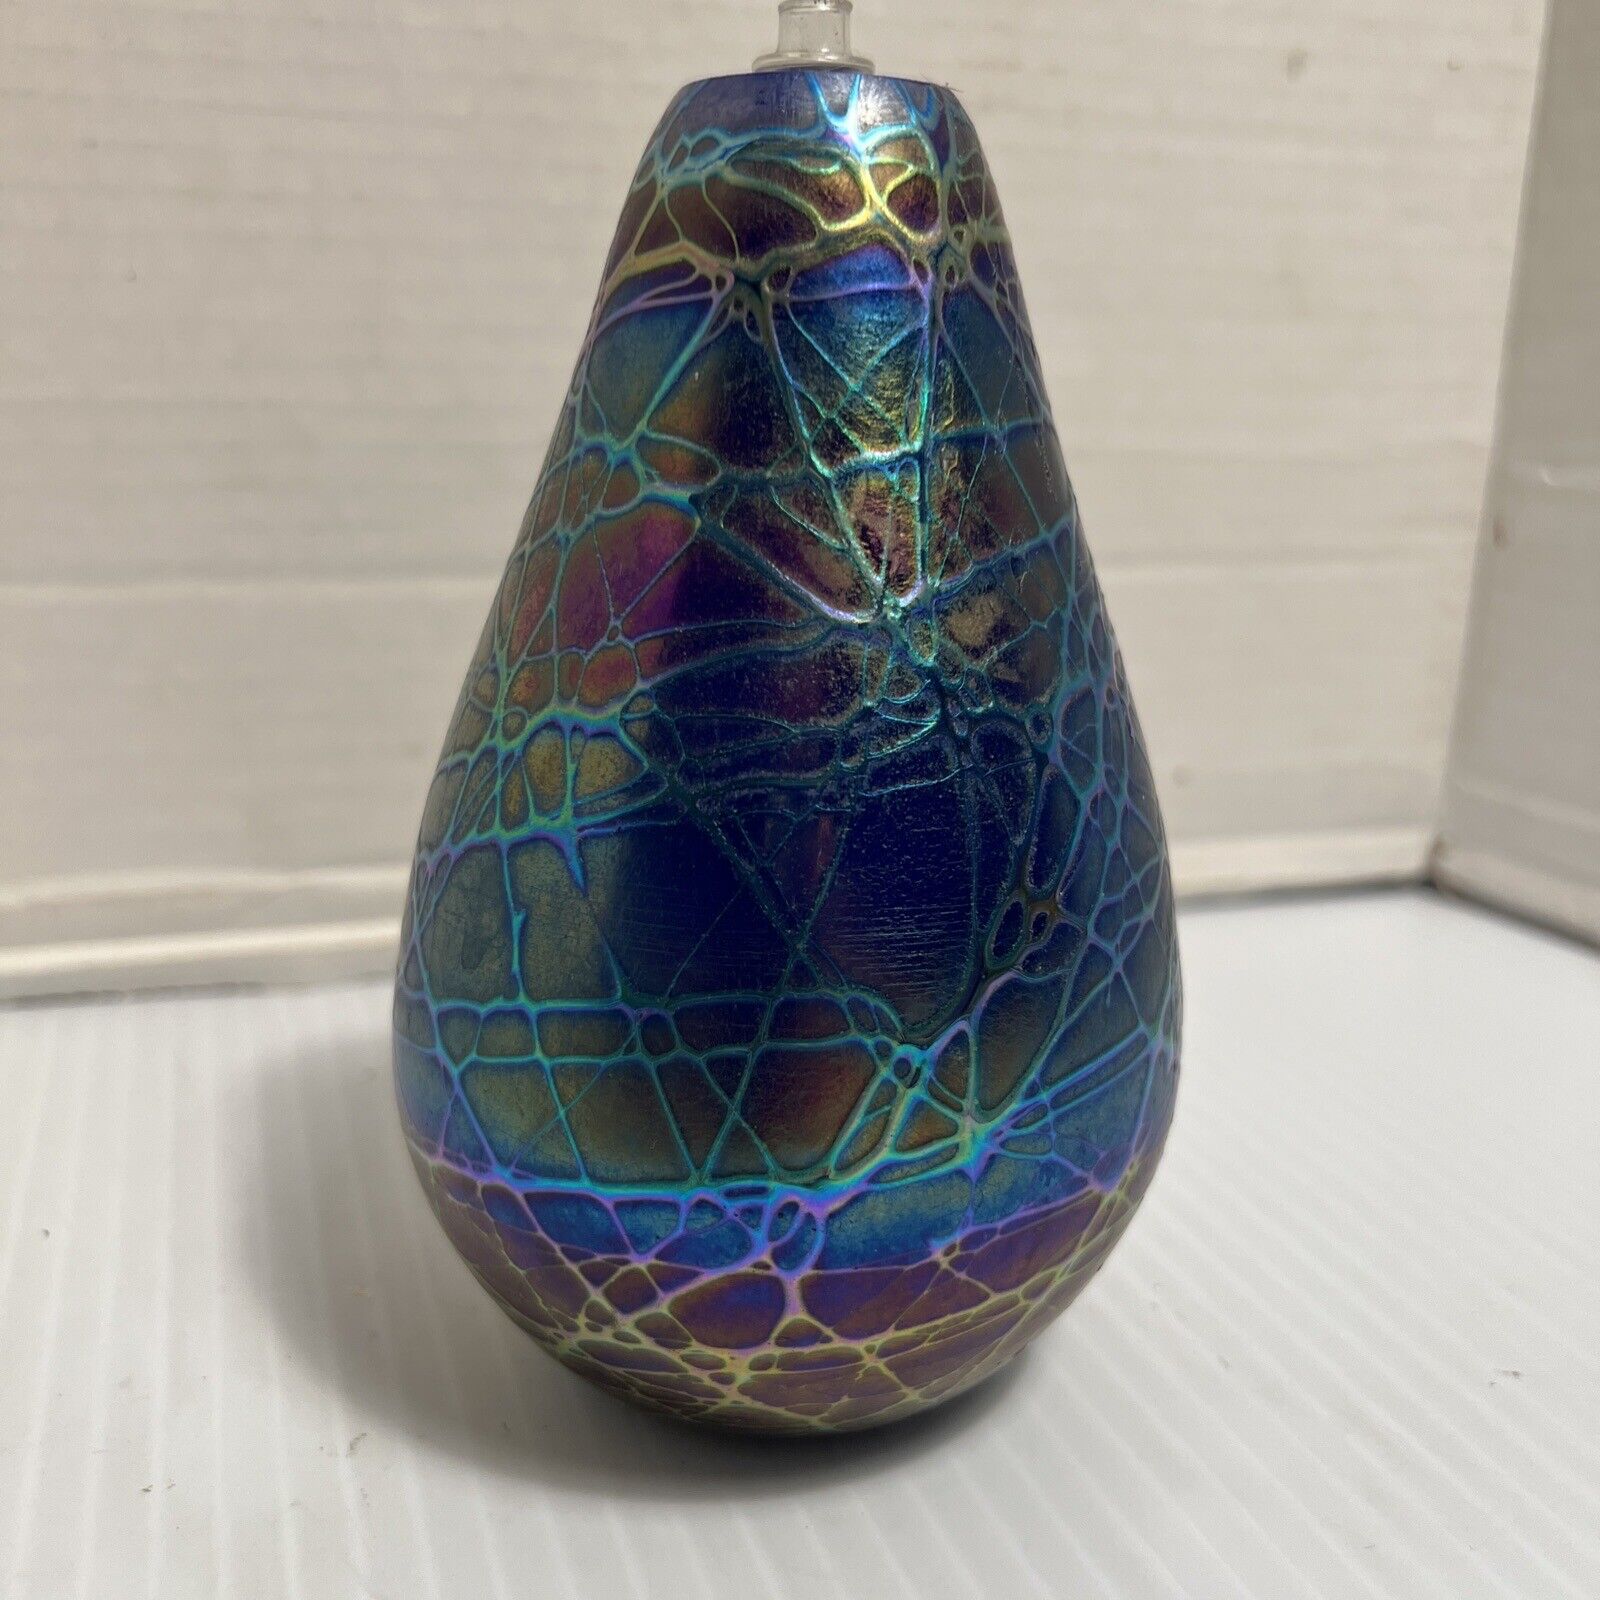 California Glass Studio Hand Blown Incandescent Oil Lamp Blues Purples